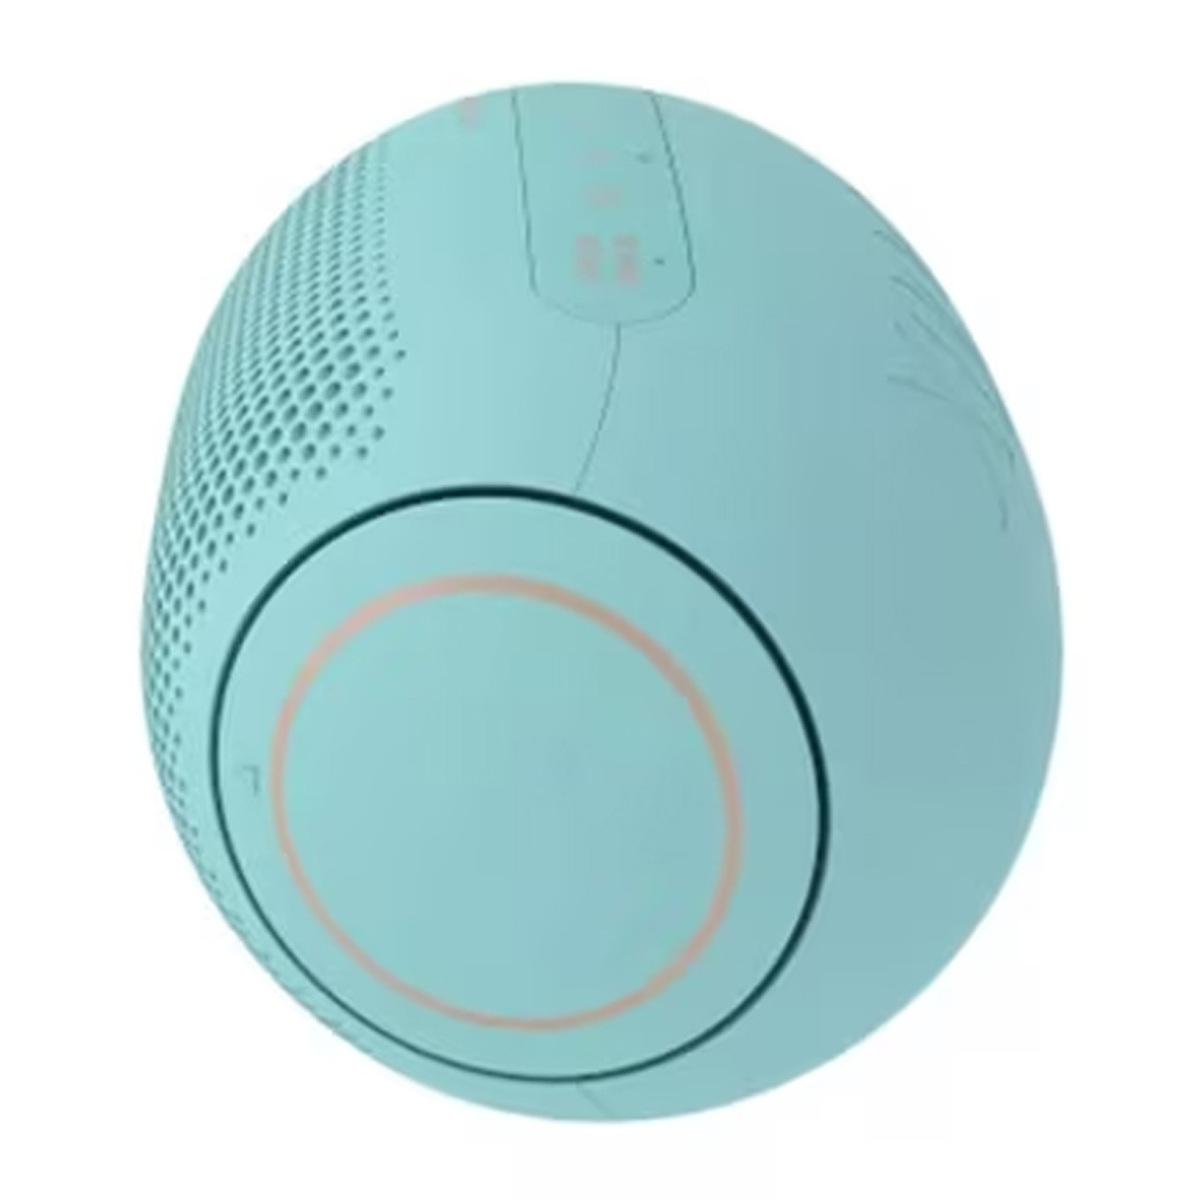 LG XBOOM Go Jellybean Portable Bluetooth Speaker, Ice Mint (Blue), PL2B